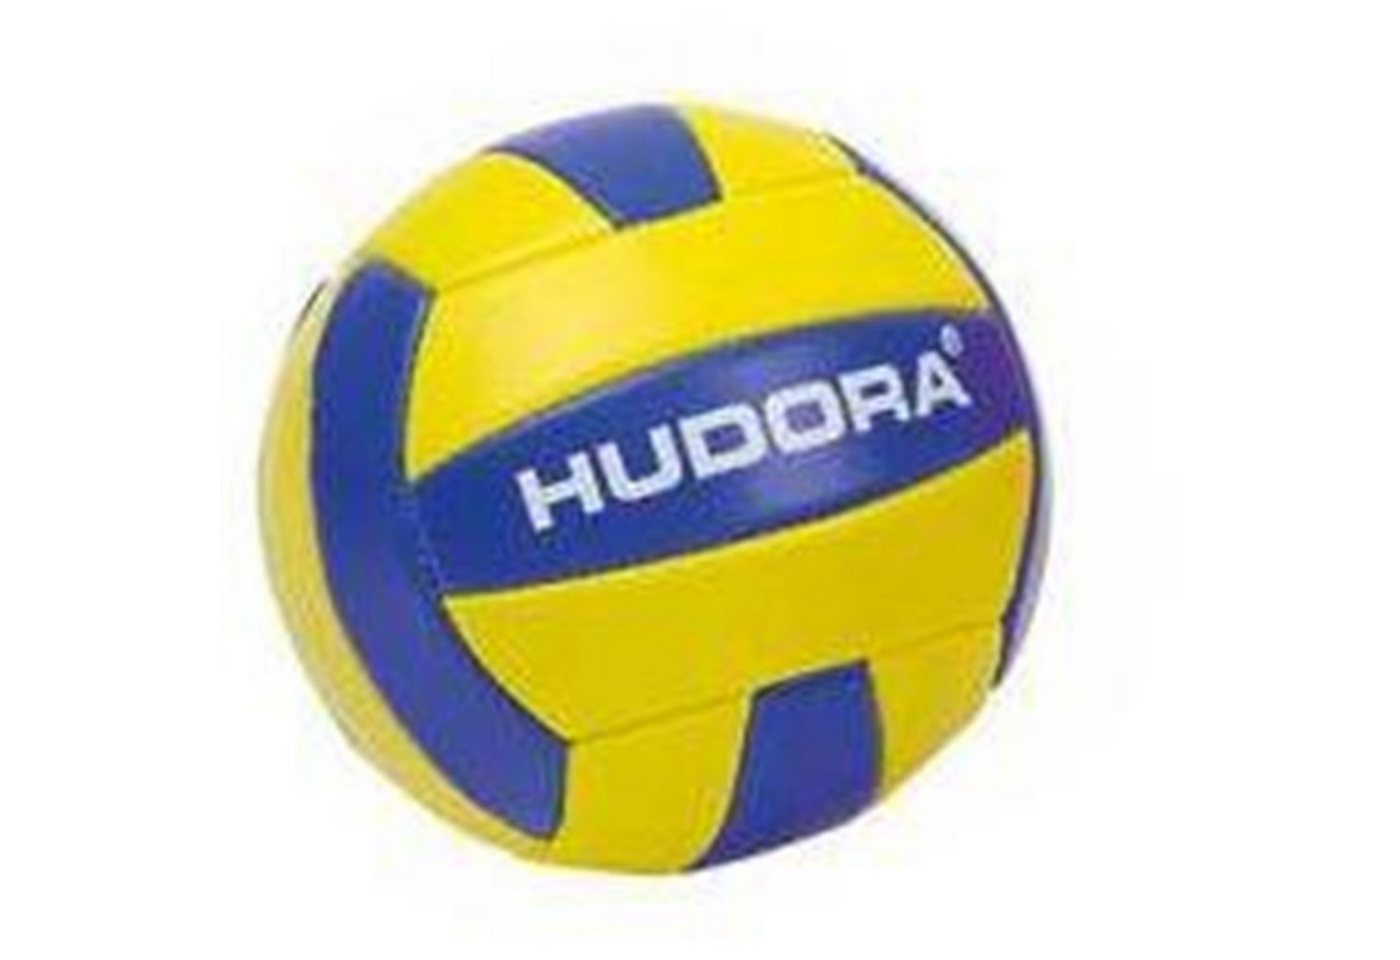 Hudora Spielball 71309 Miniball, sortiert von Hudora